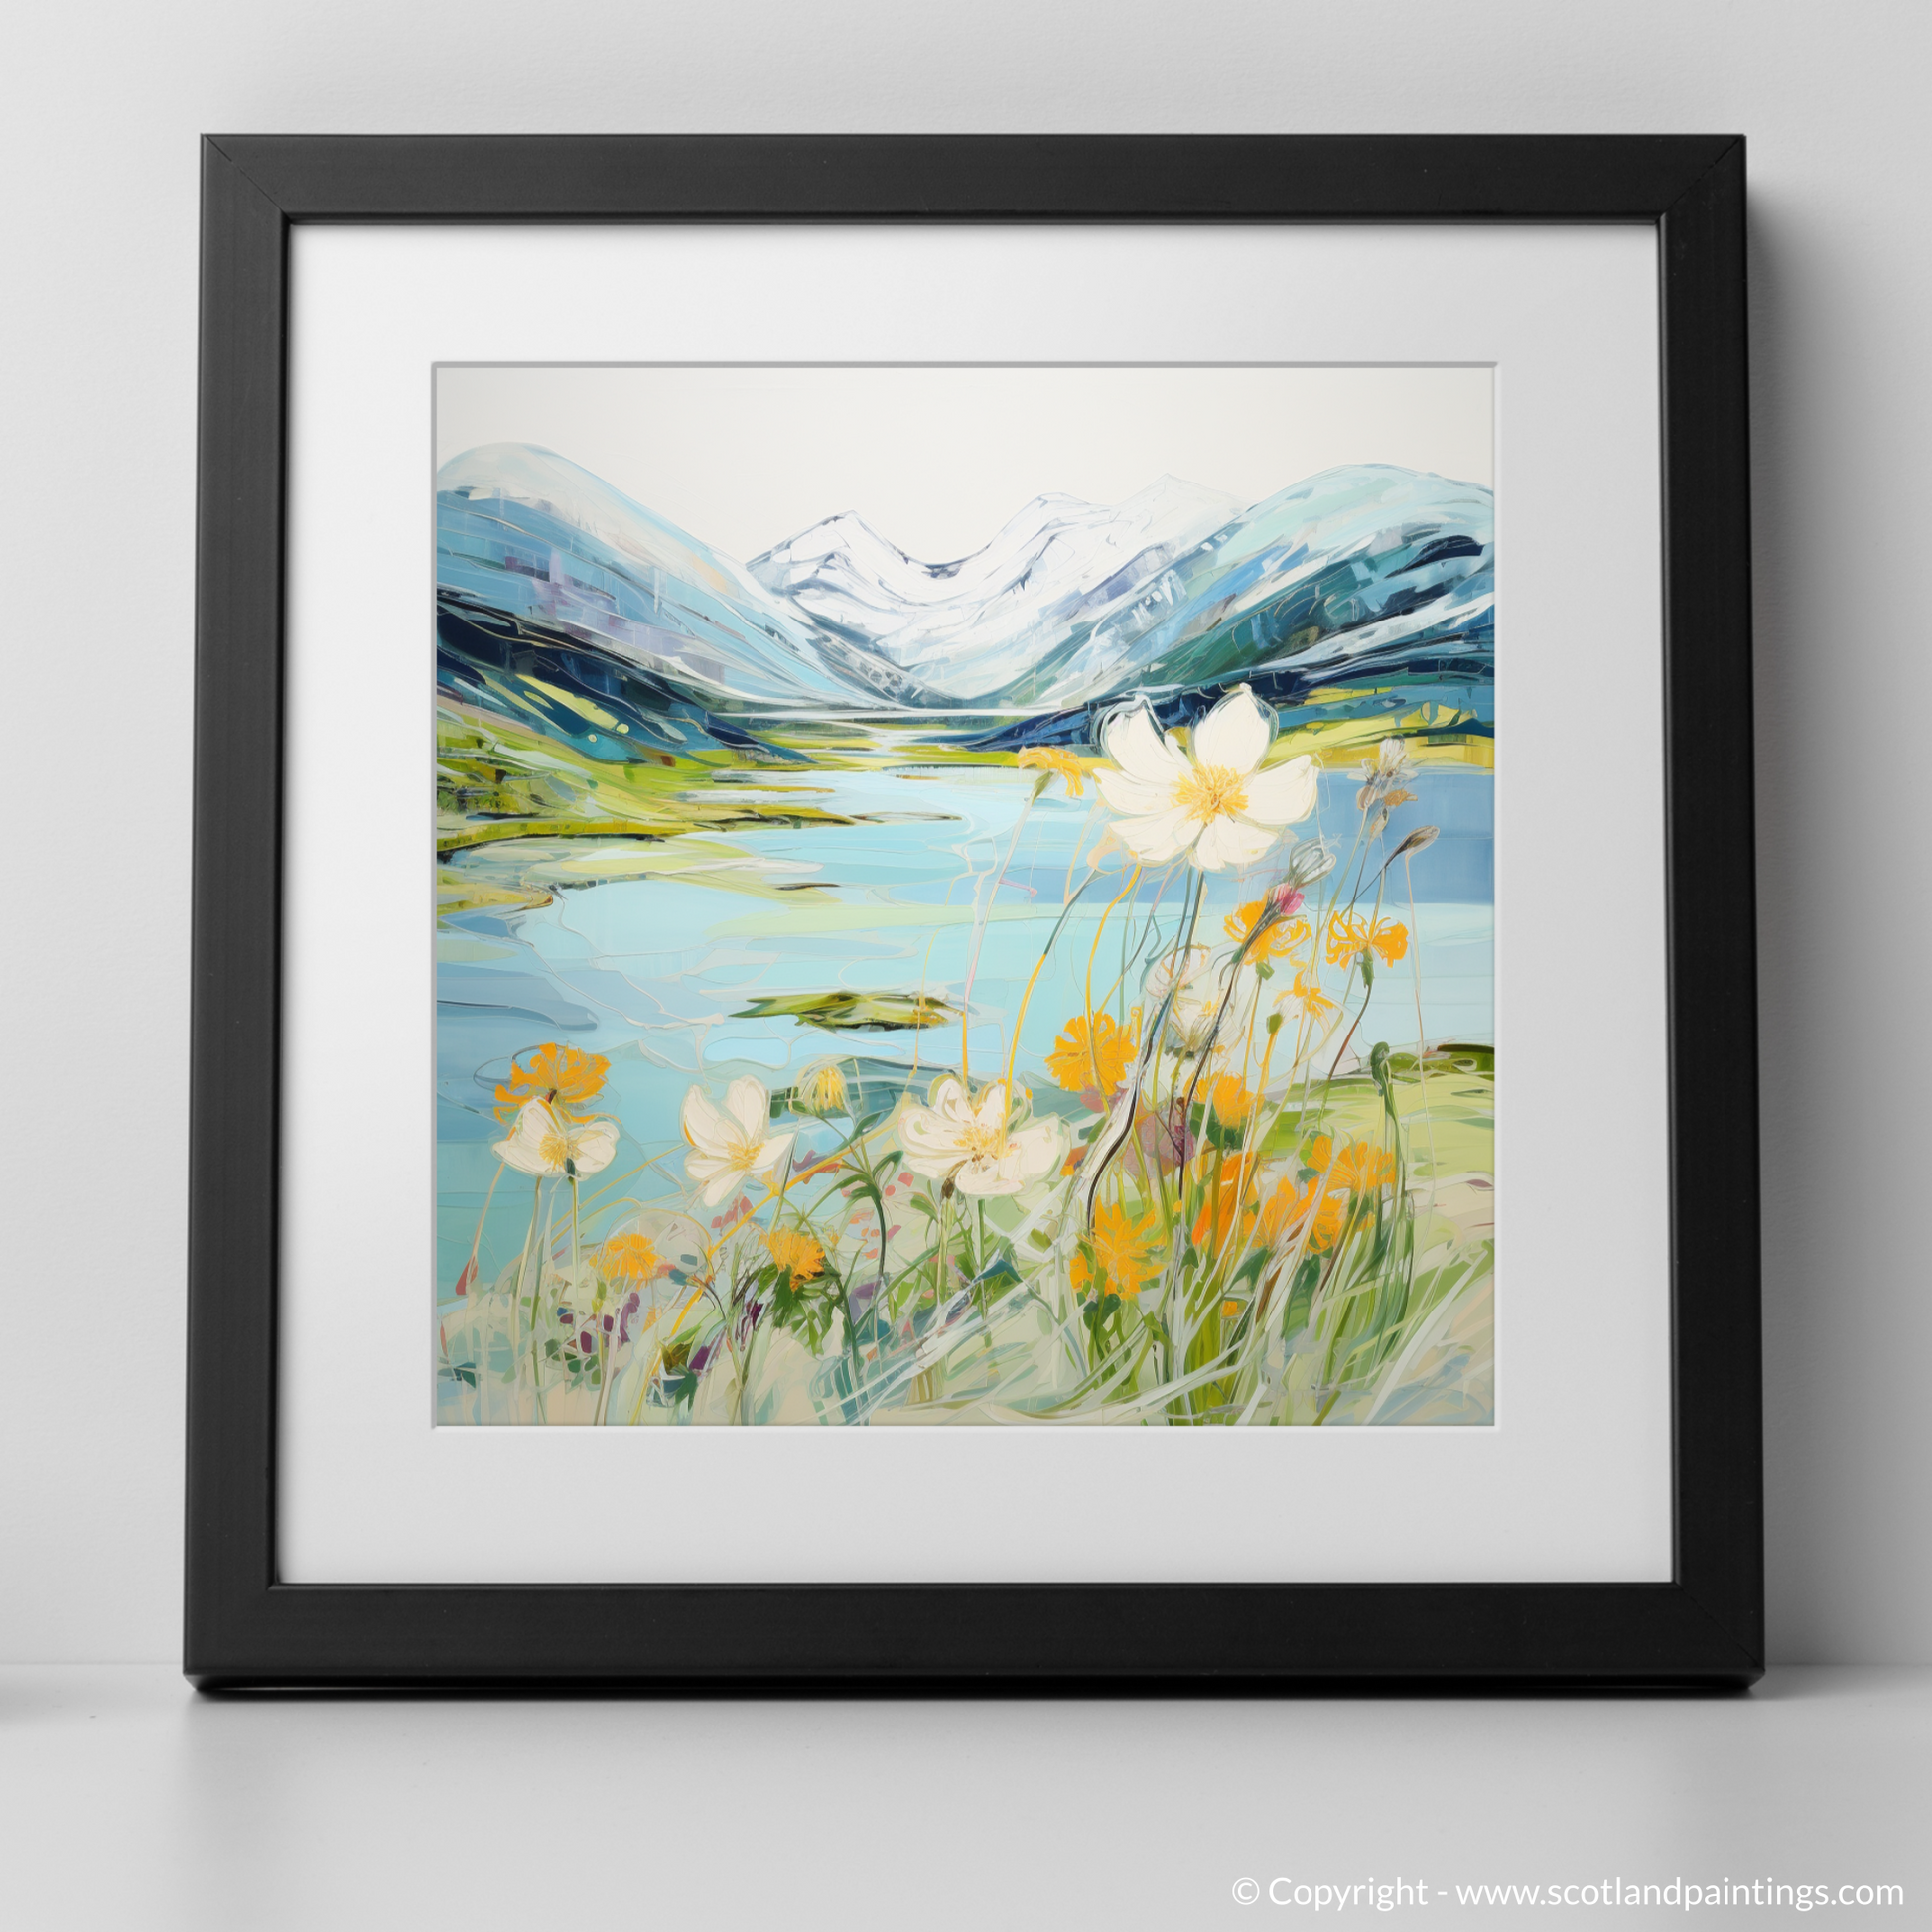 Art Print of Mountain avens near serene lochan in Glencoe with a black frame